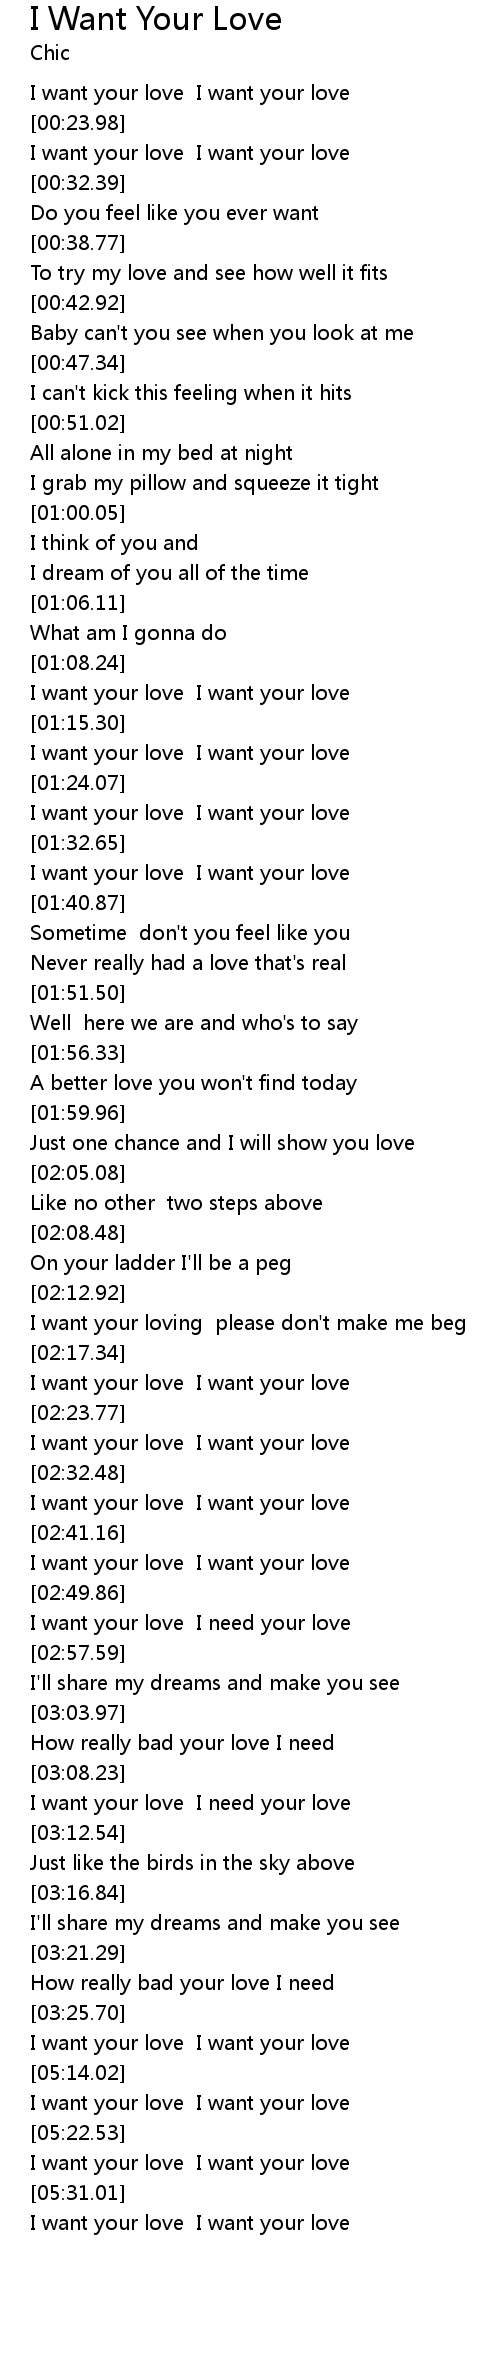 Your dont lyrics need love NCT DREAM